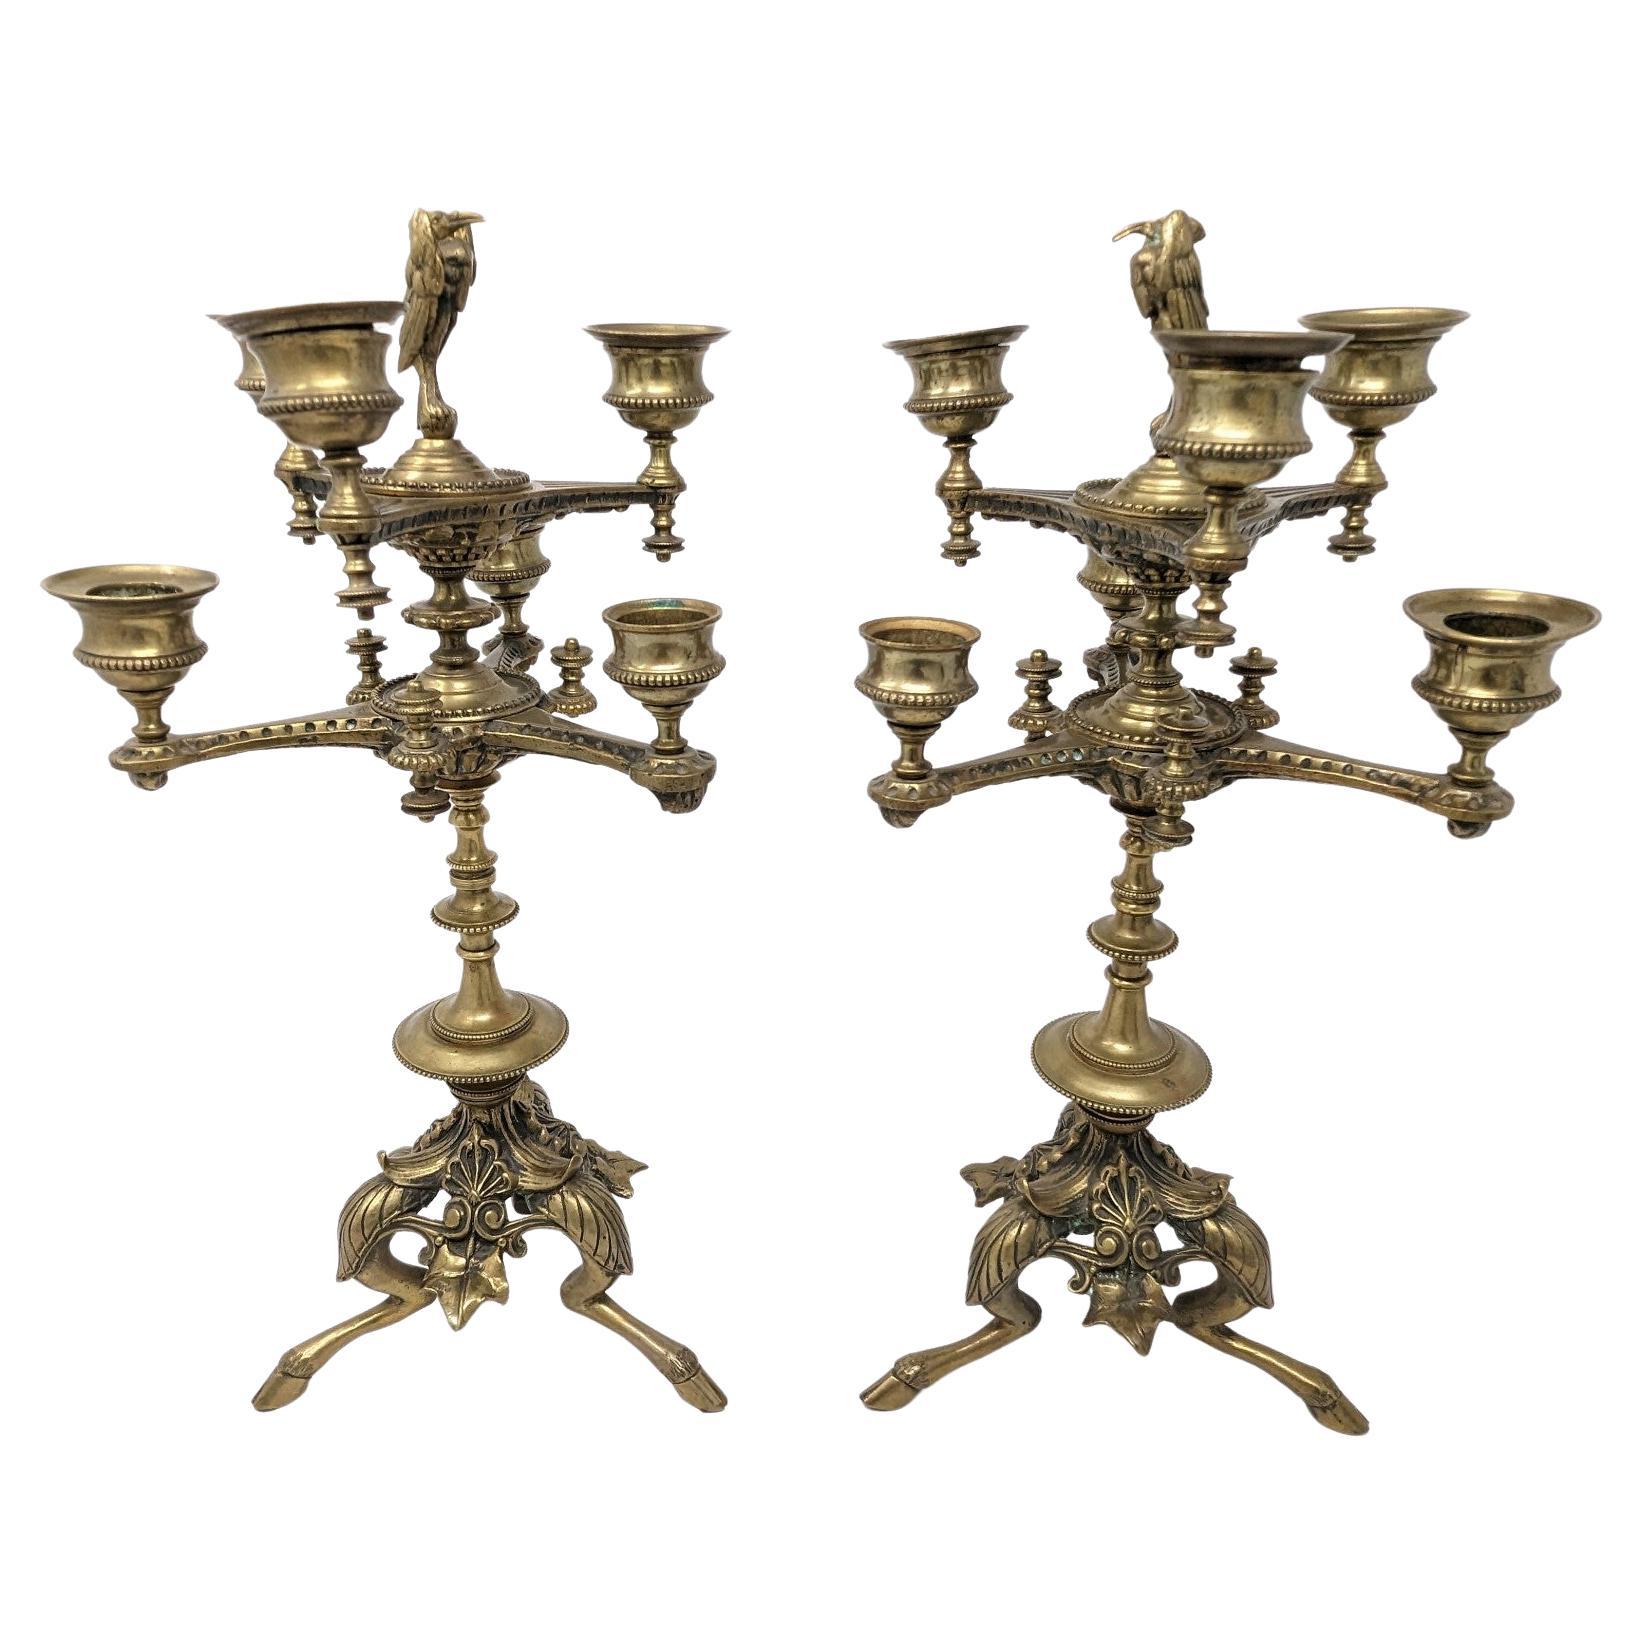 Pair of Antique Candelabras, 19th Century European Brass Candlesticks Footed